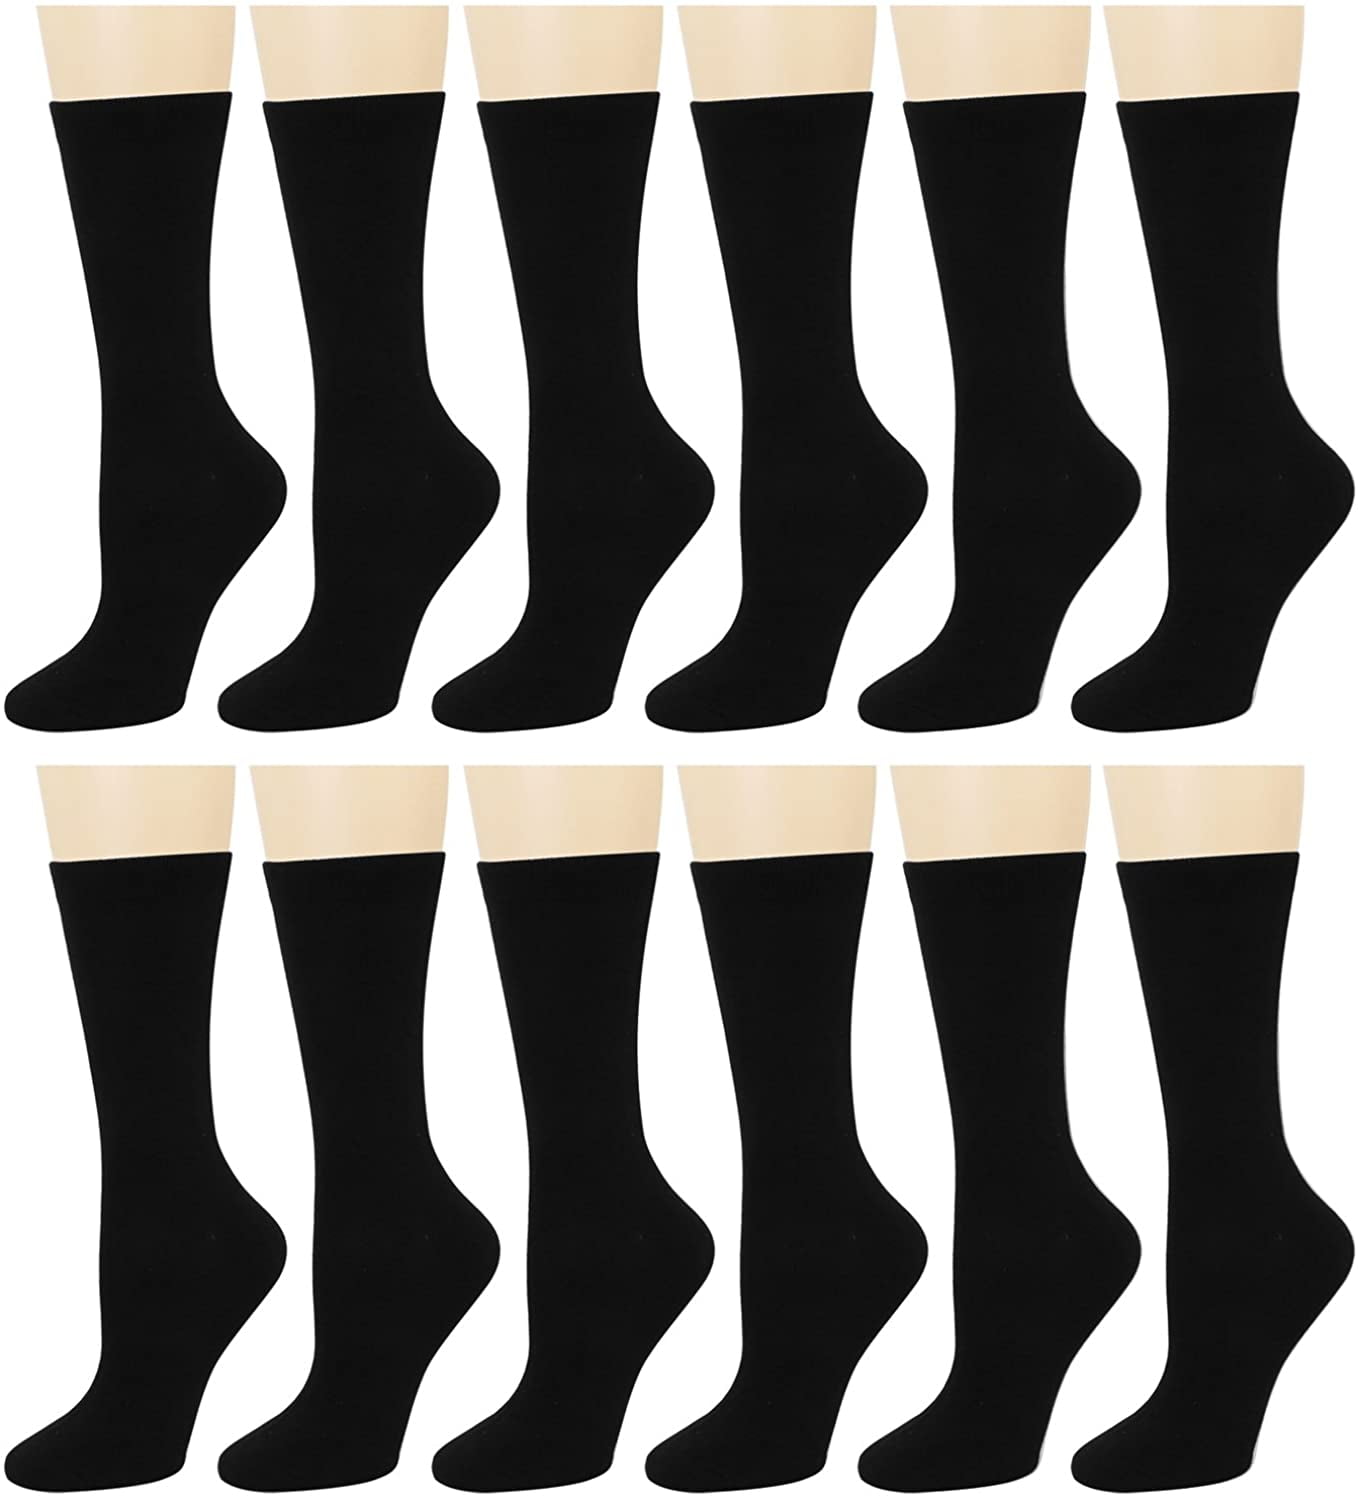 12 Pairs Women's Crew Socks Fancy Novelty Designed Size 9-11 Black ...